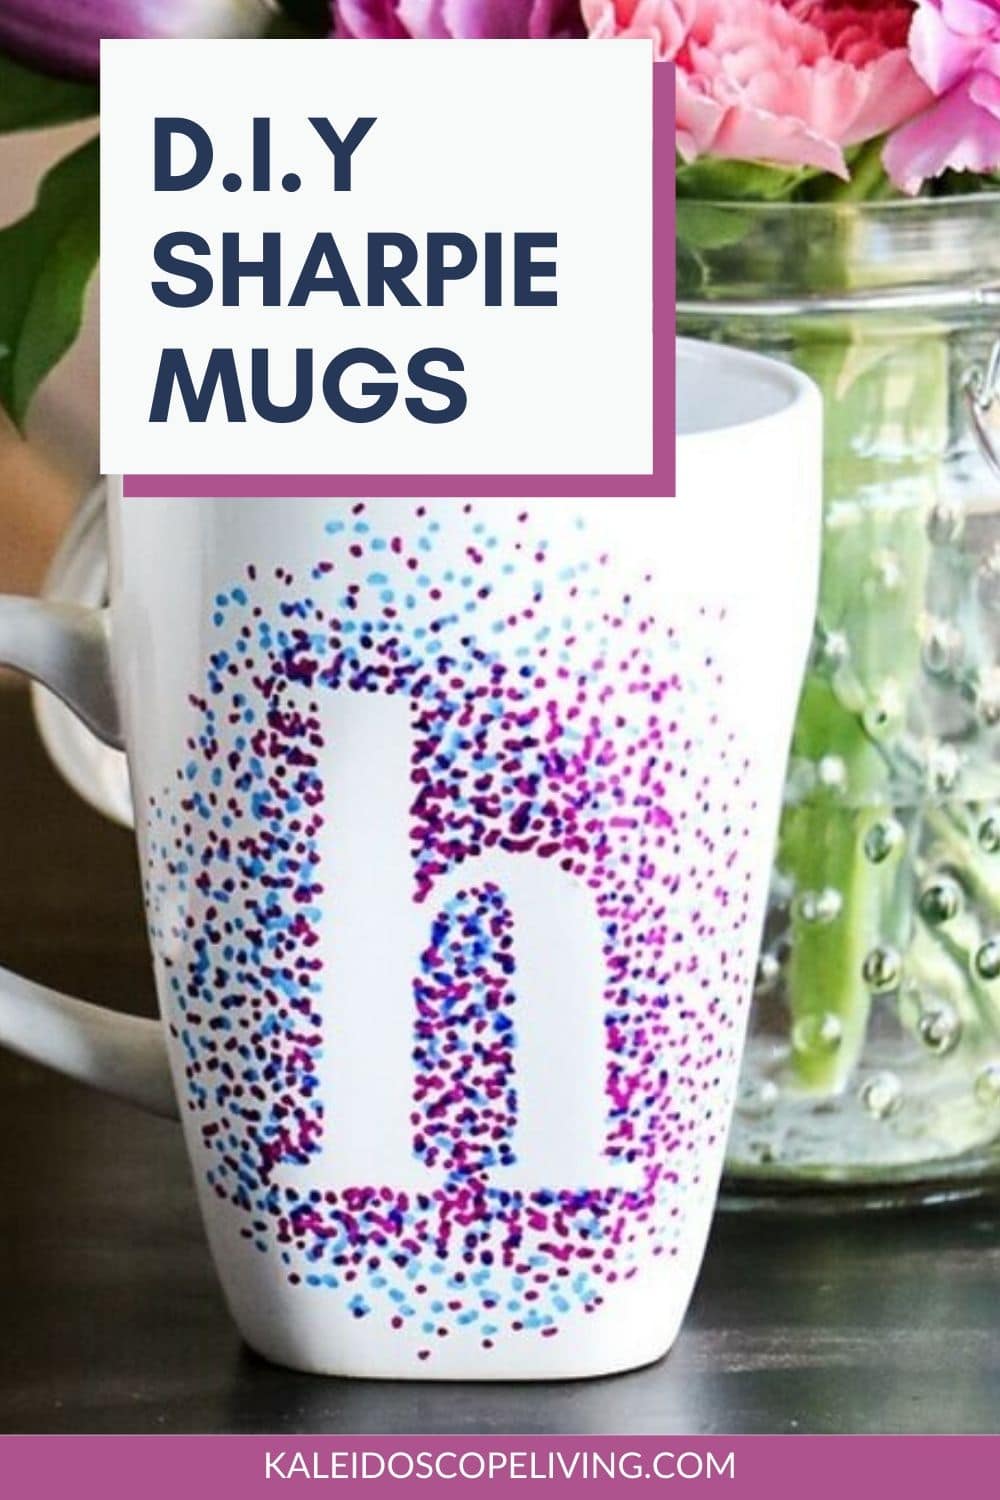 https://designertrapped.com/wp-content/uploads/2018/05/diy-sharpie-mugs-1.jpg